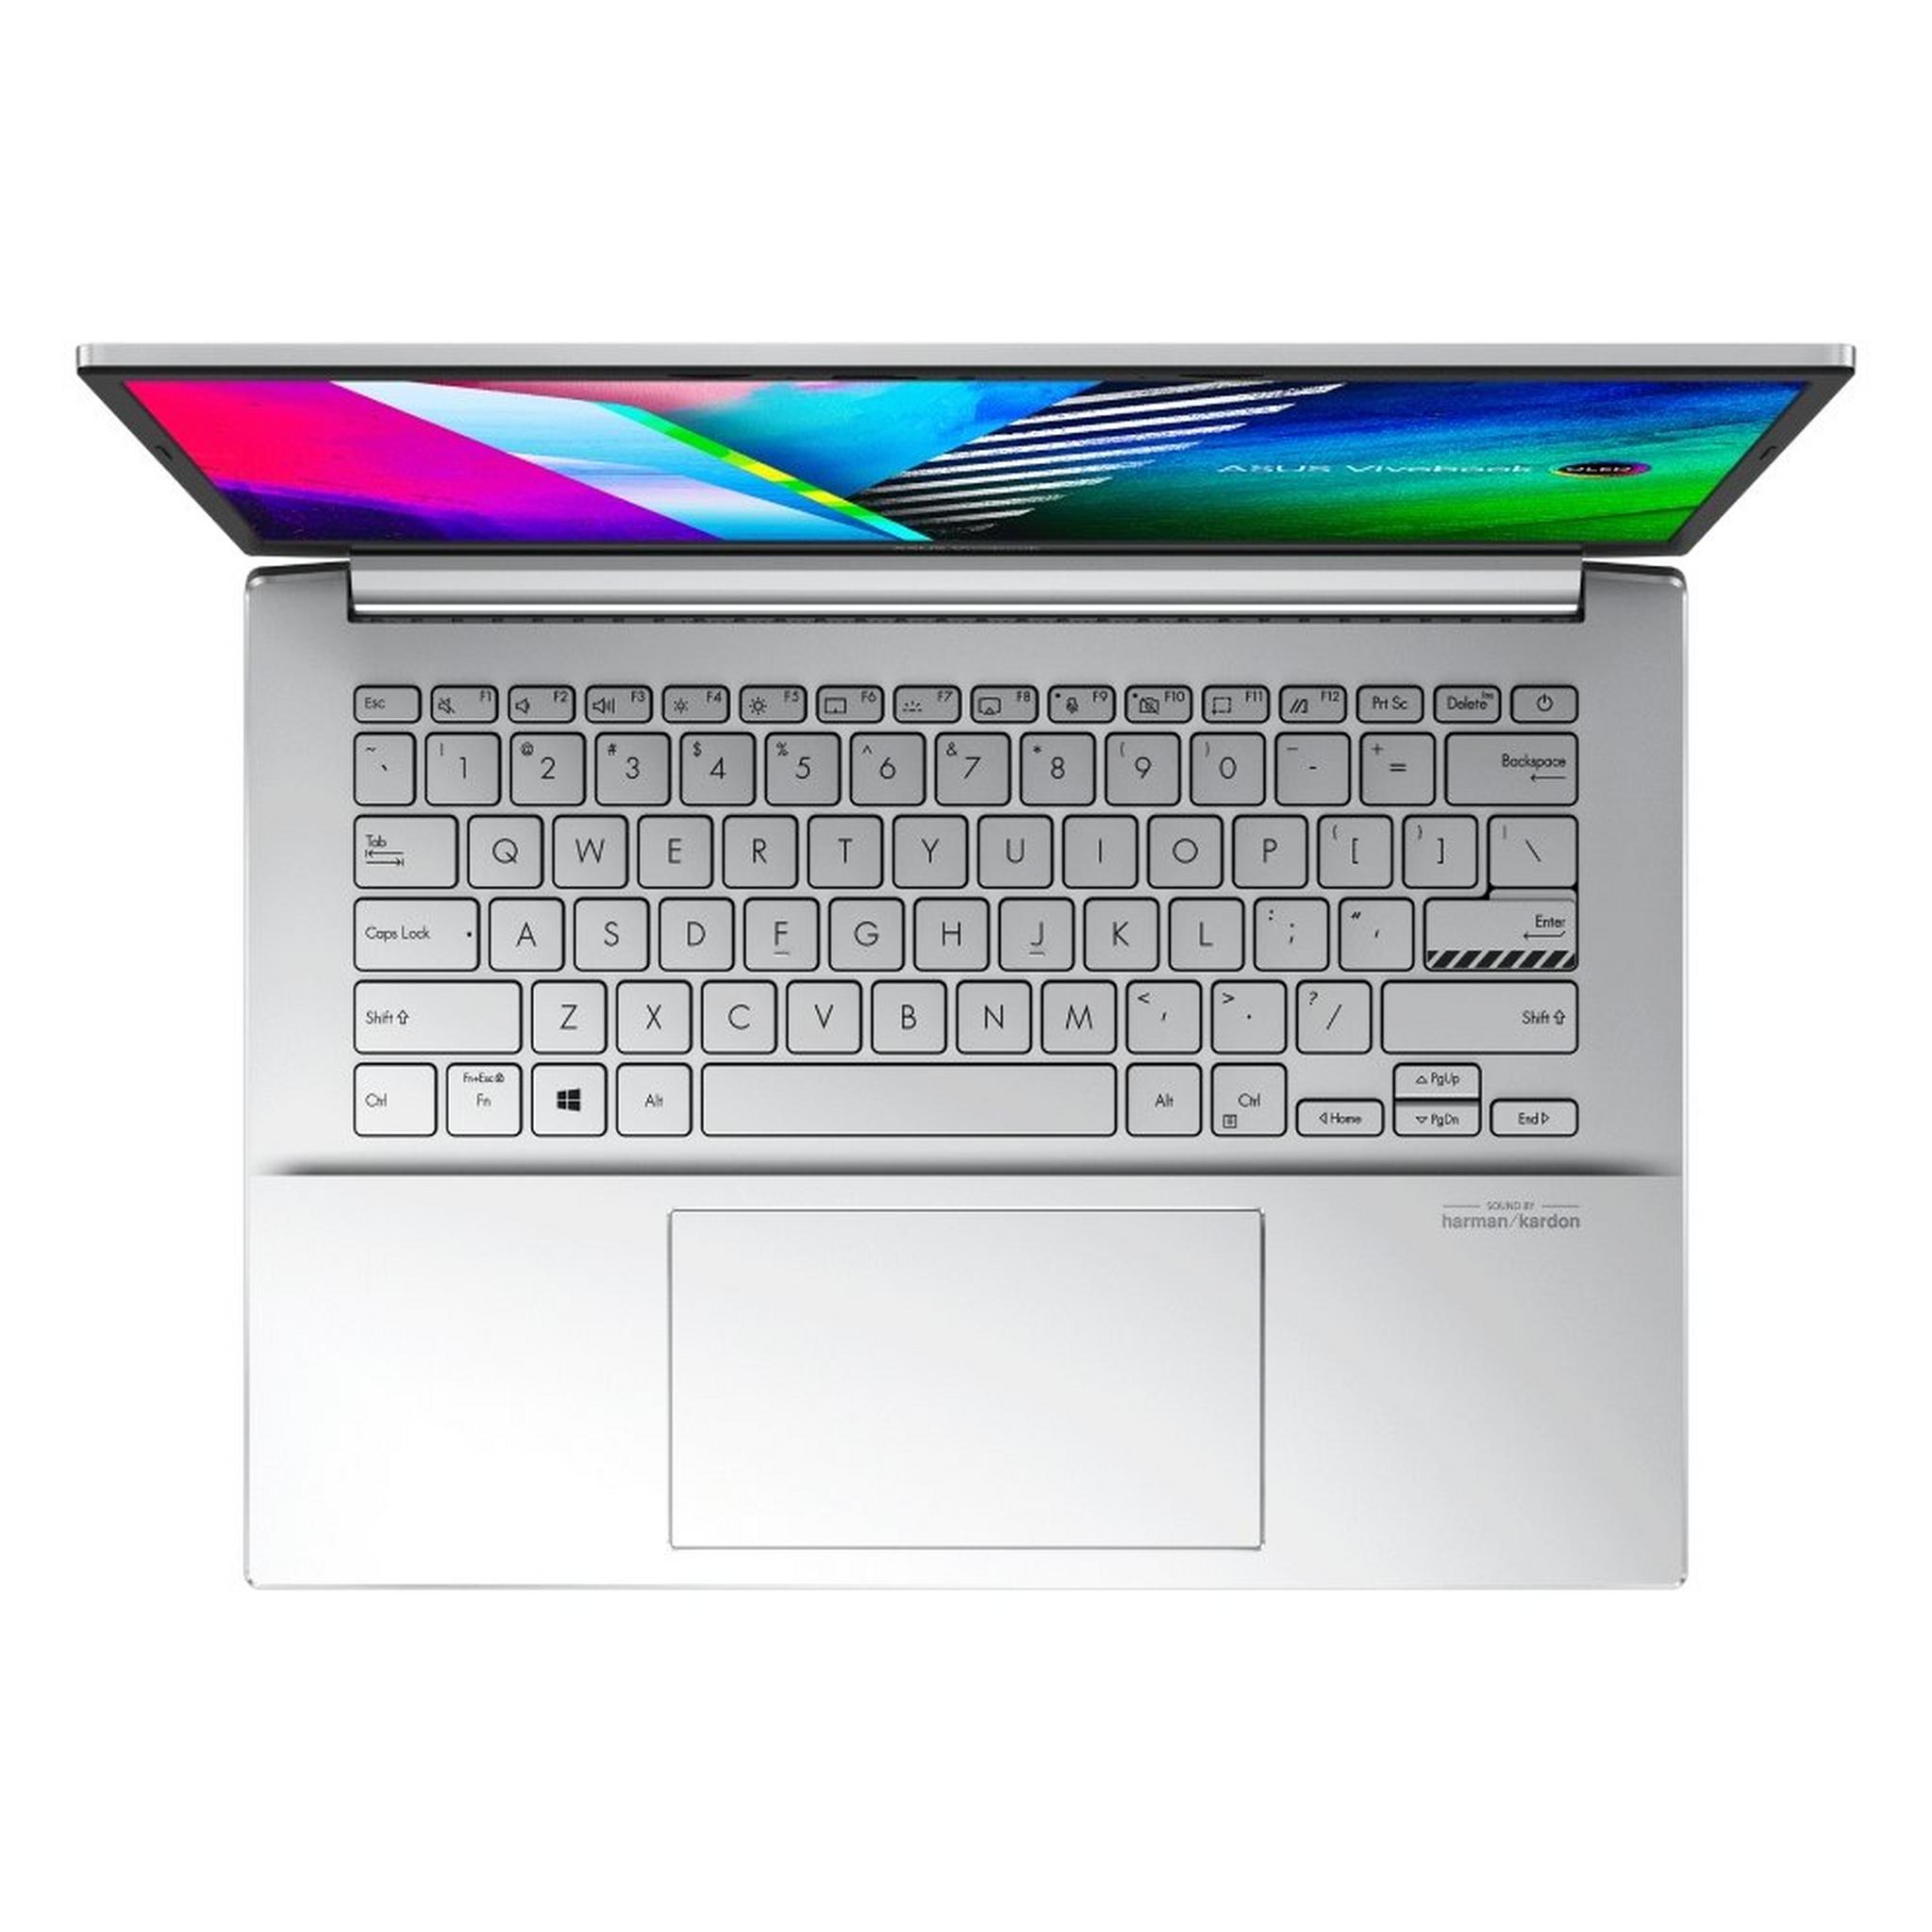 Asus Vivobook Pro 14 OLED Intel Core i7 11th Gen, 16GB RAM, 1TB SSD, 14-inch Laptop - Silver